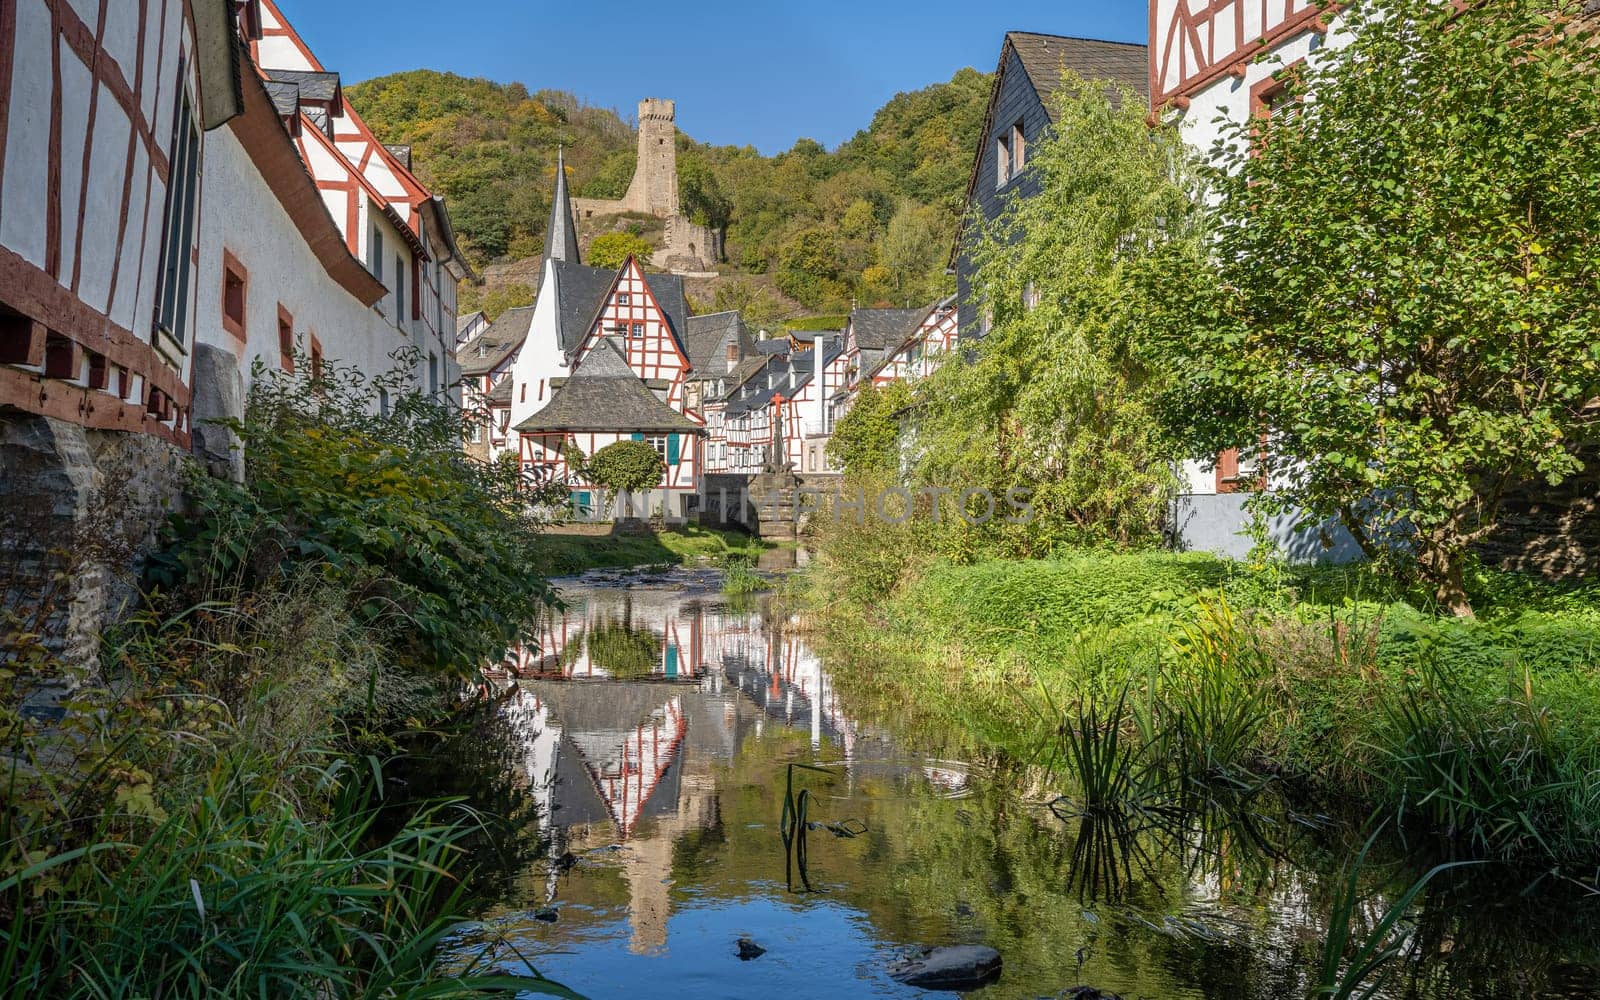 Traditional half-timber houses of the Eifel region, Monreal, Germany